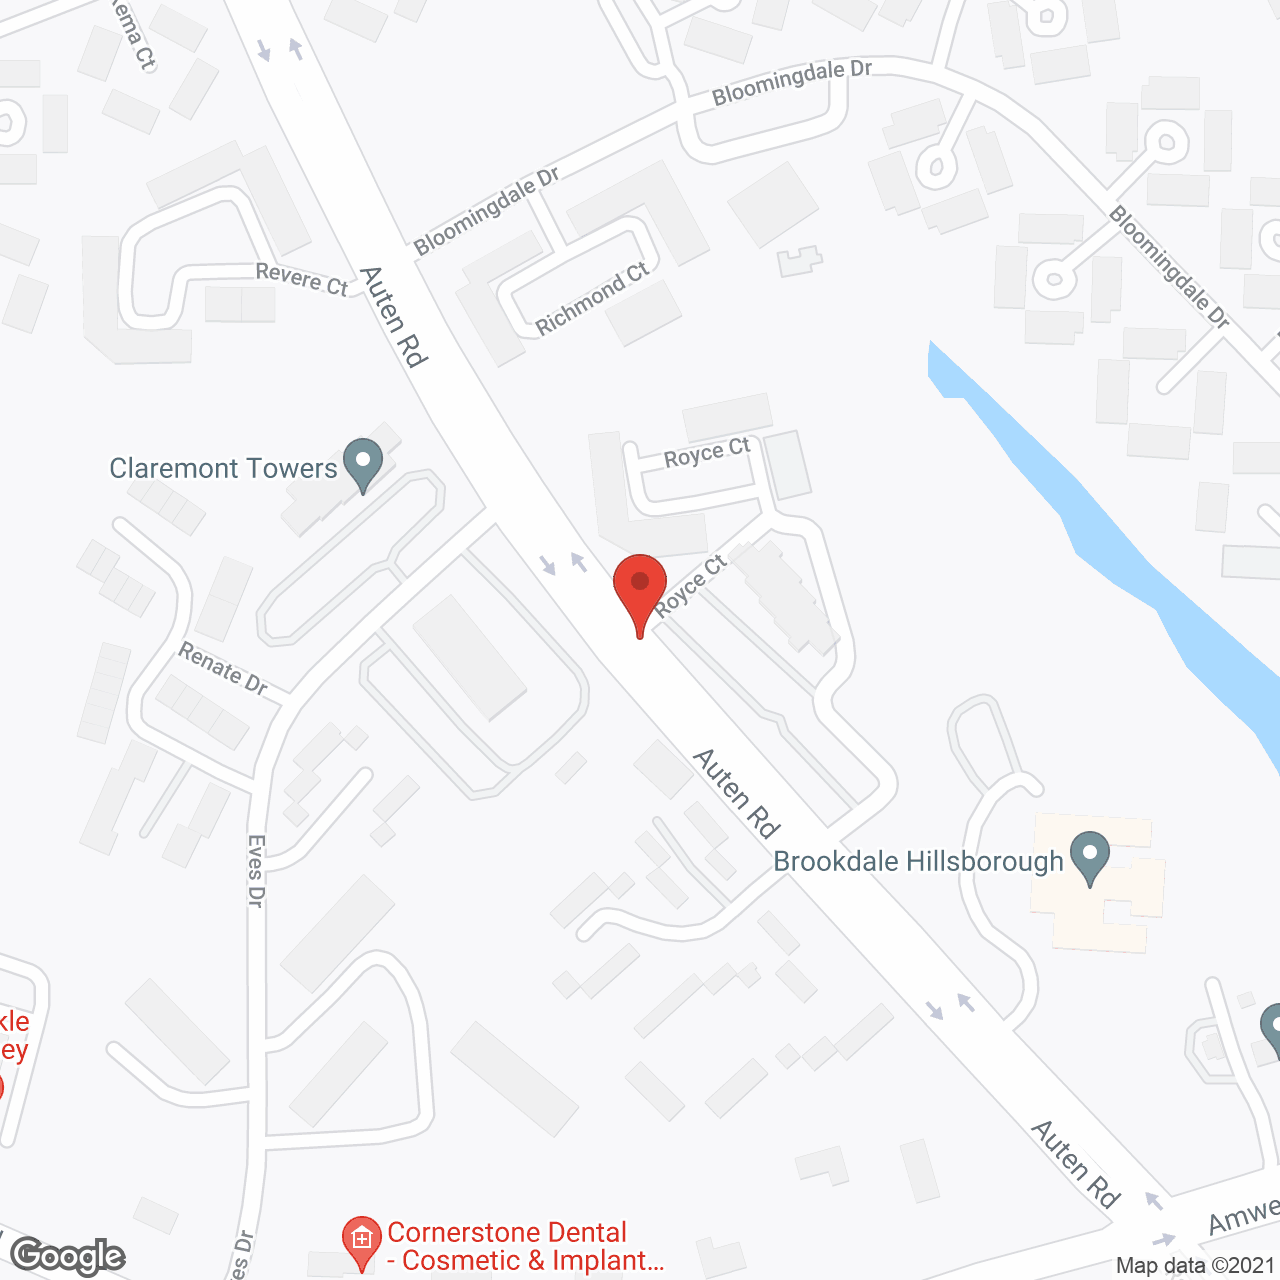 Brookdale Hillsborough in google map